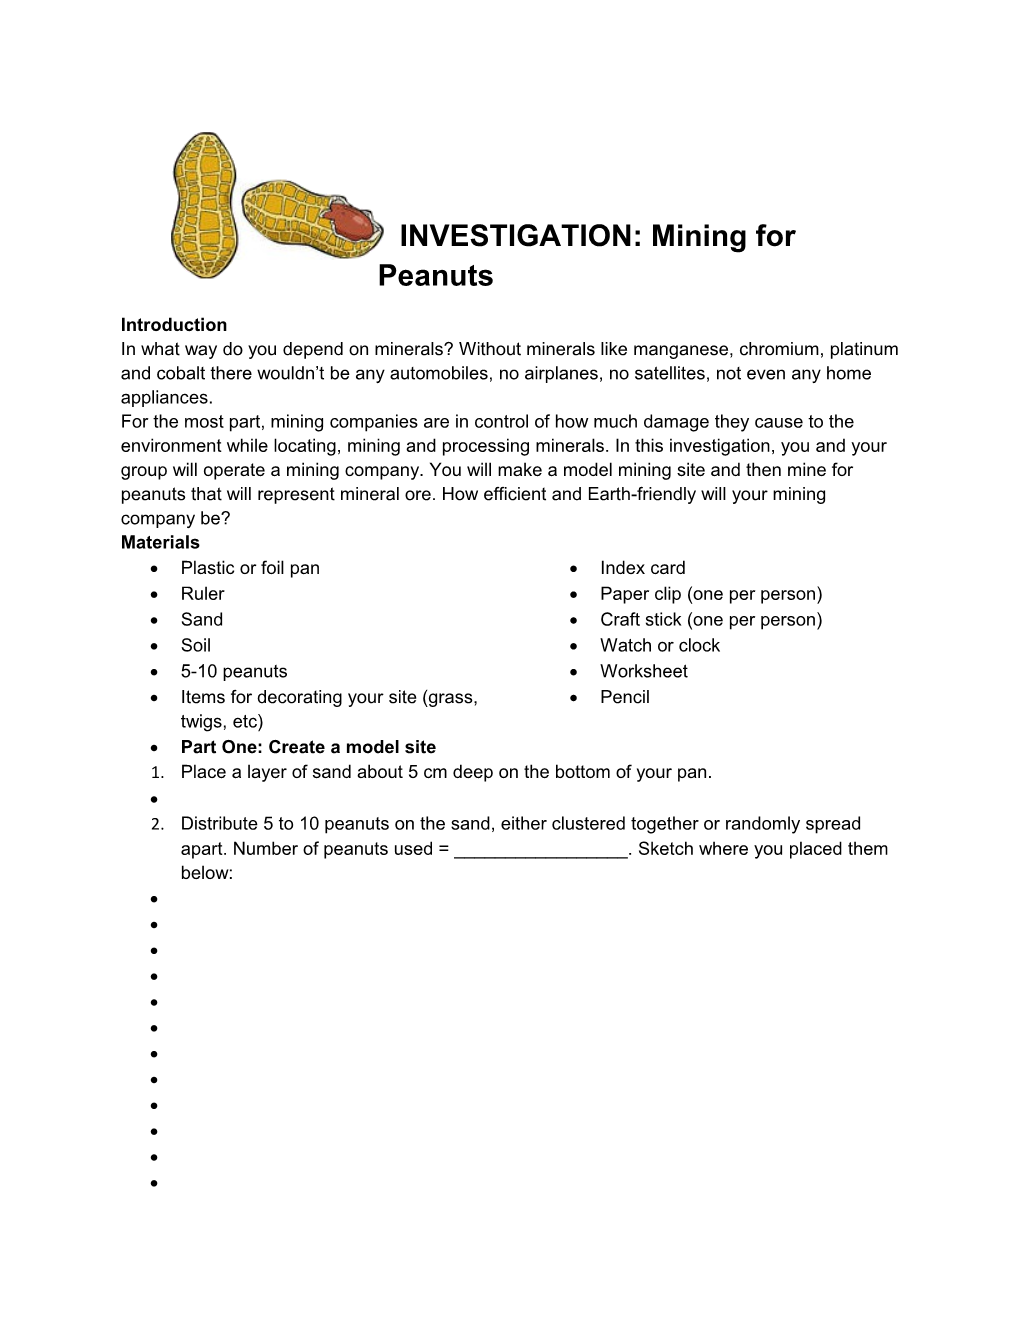 INVESTIGATION: Mining for Peanuts